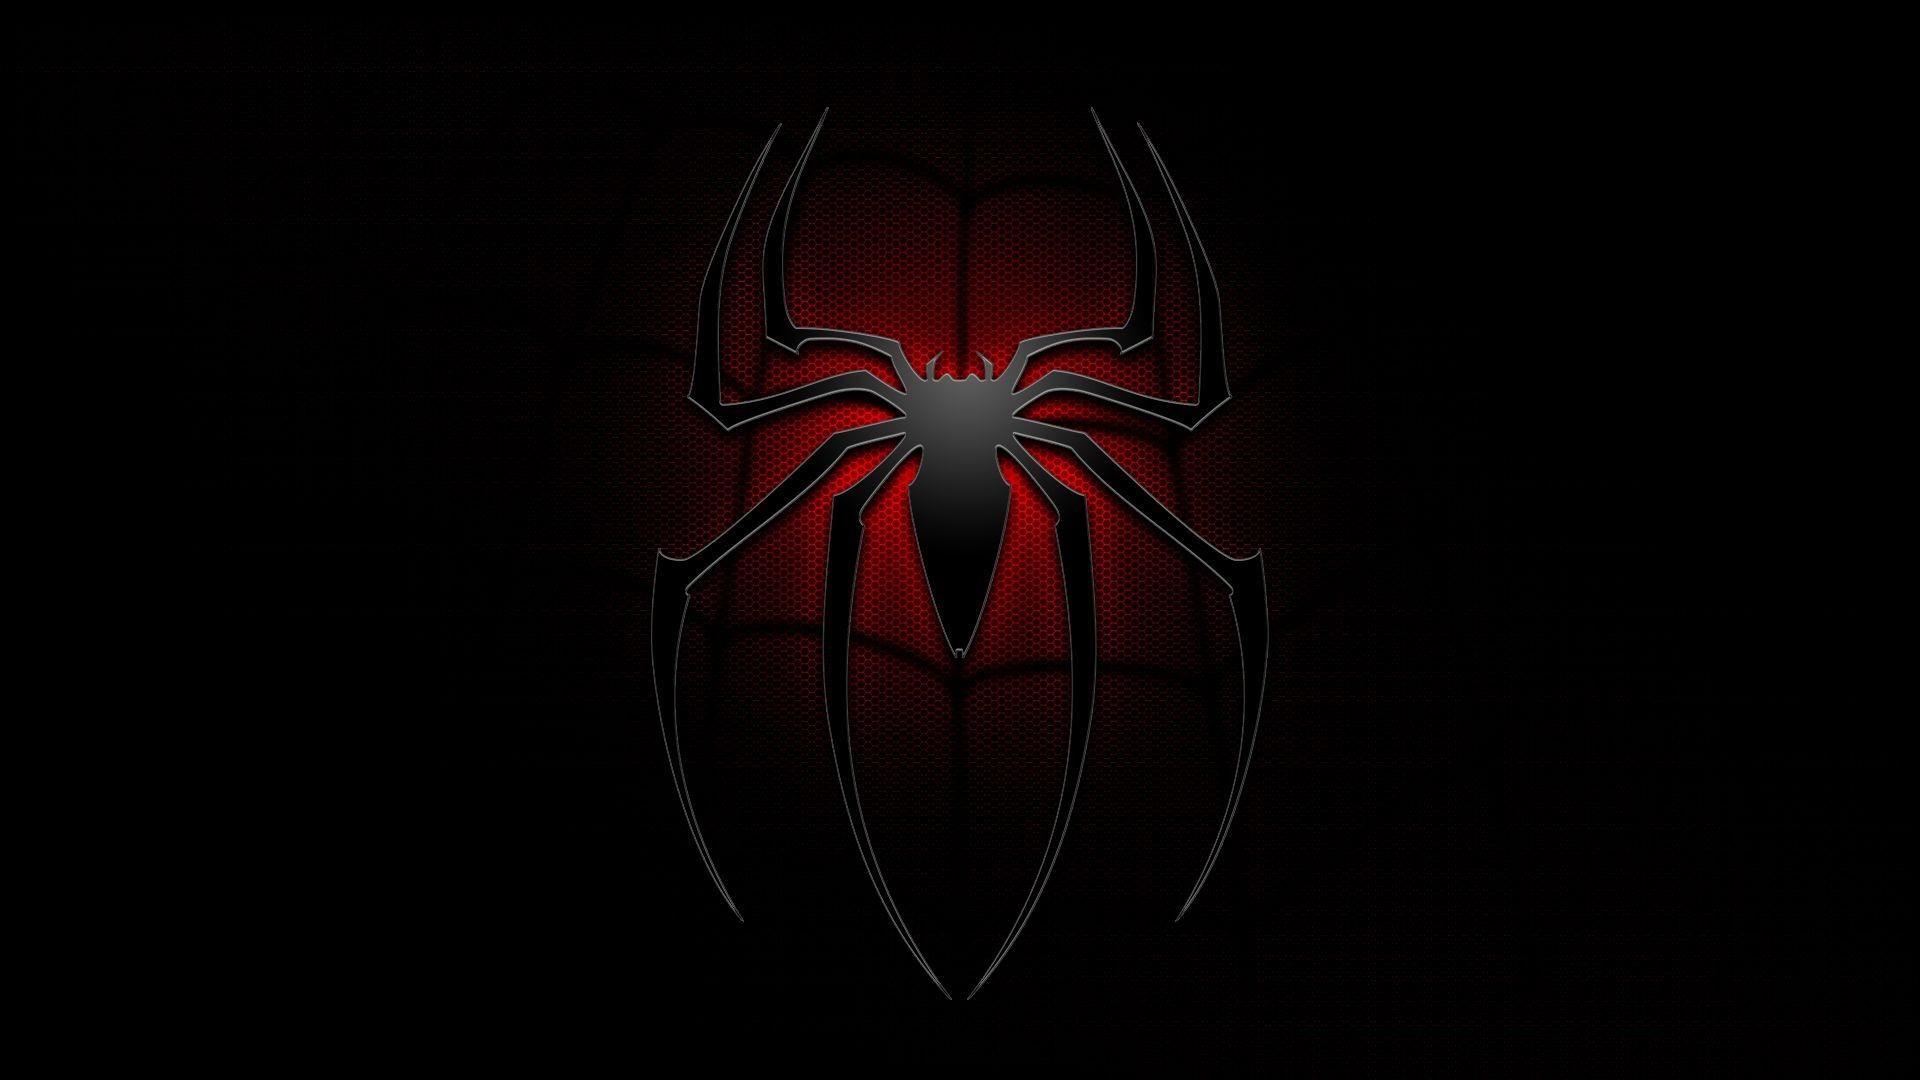 1920x1080, Image For Black Spiderman Logo Wallpaper - Darkness - HD Wallpaper 